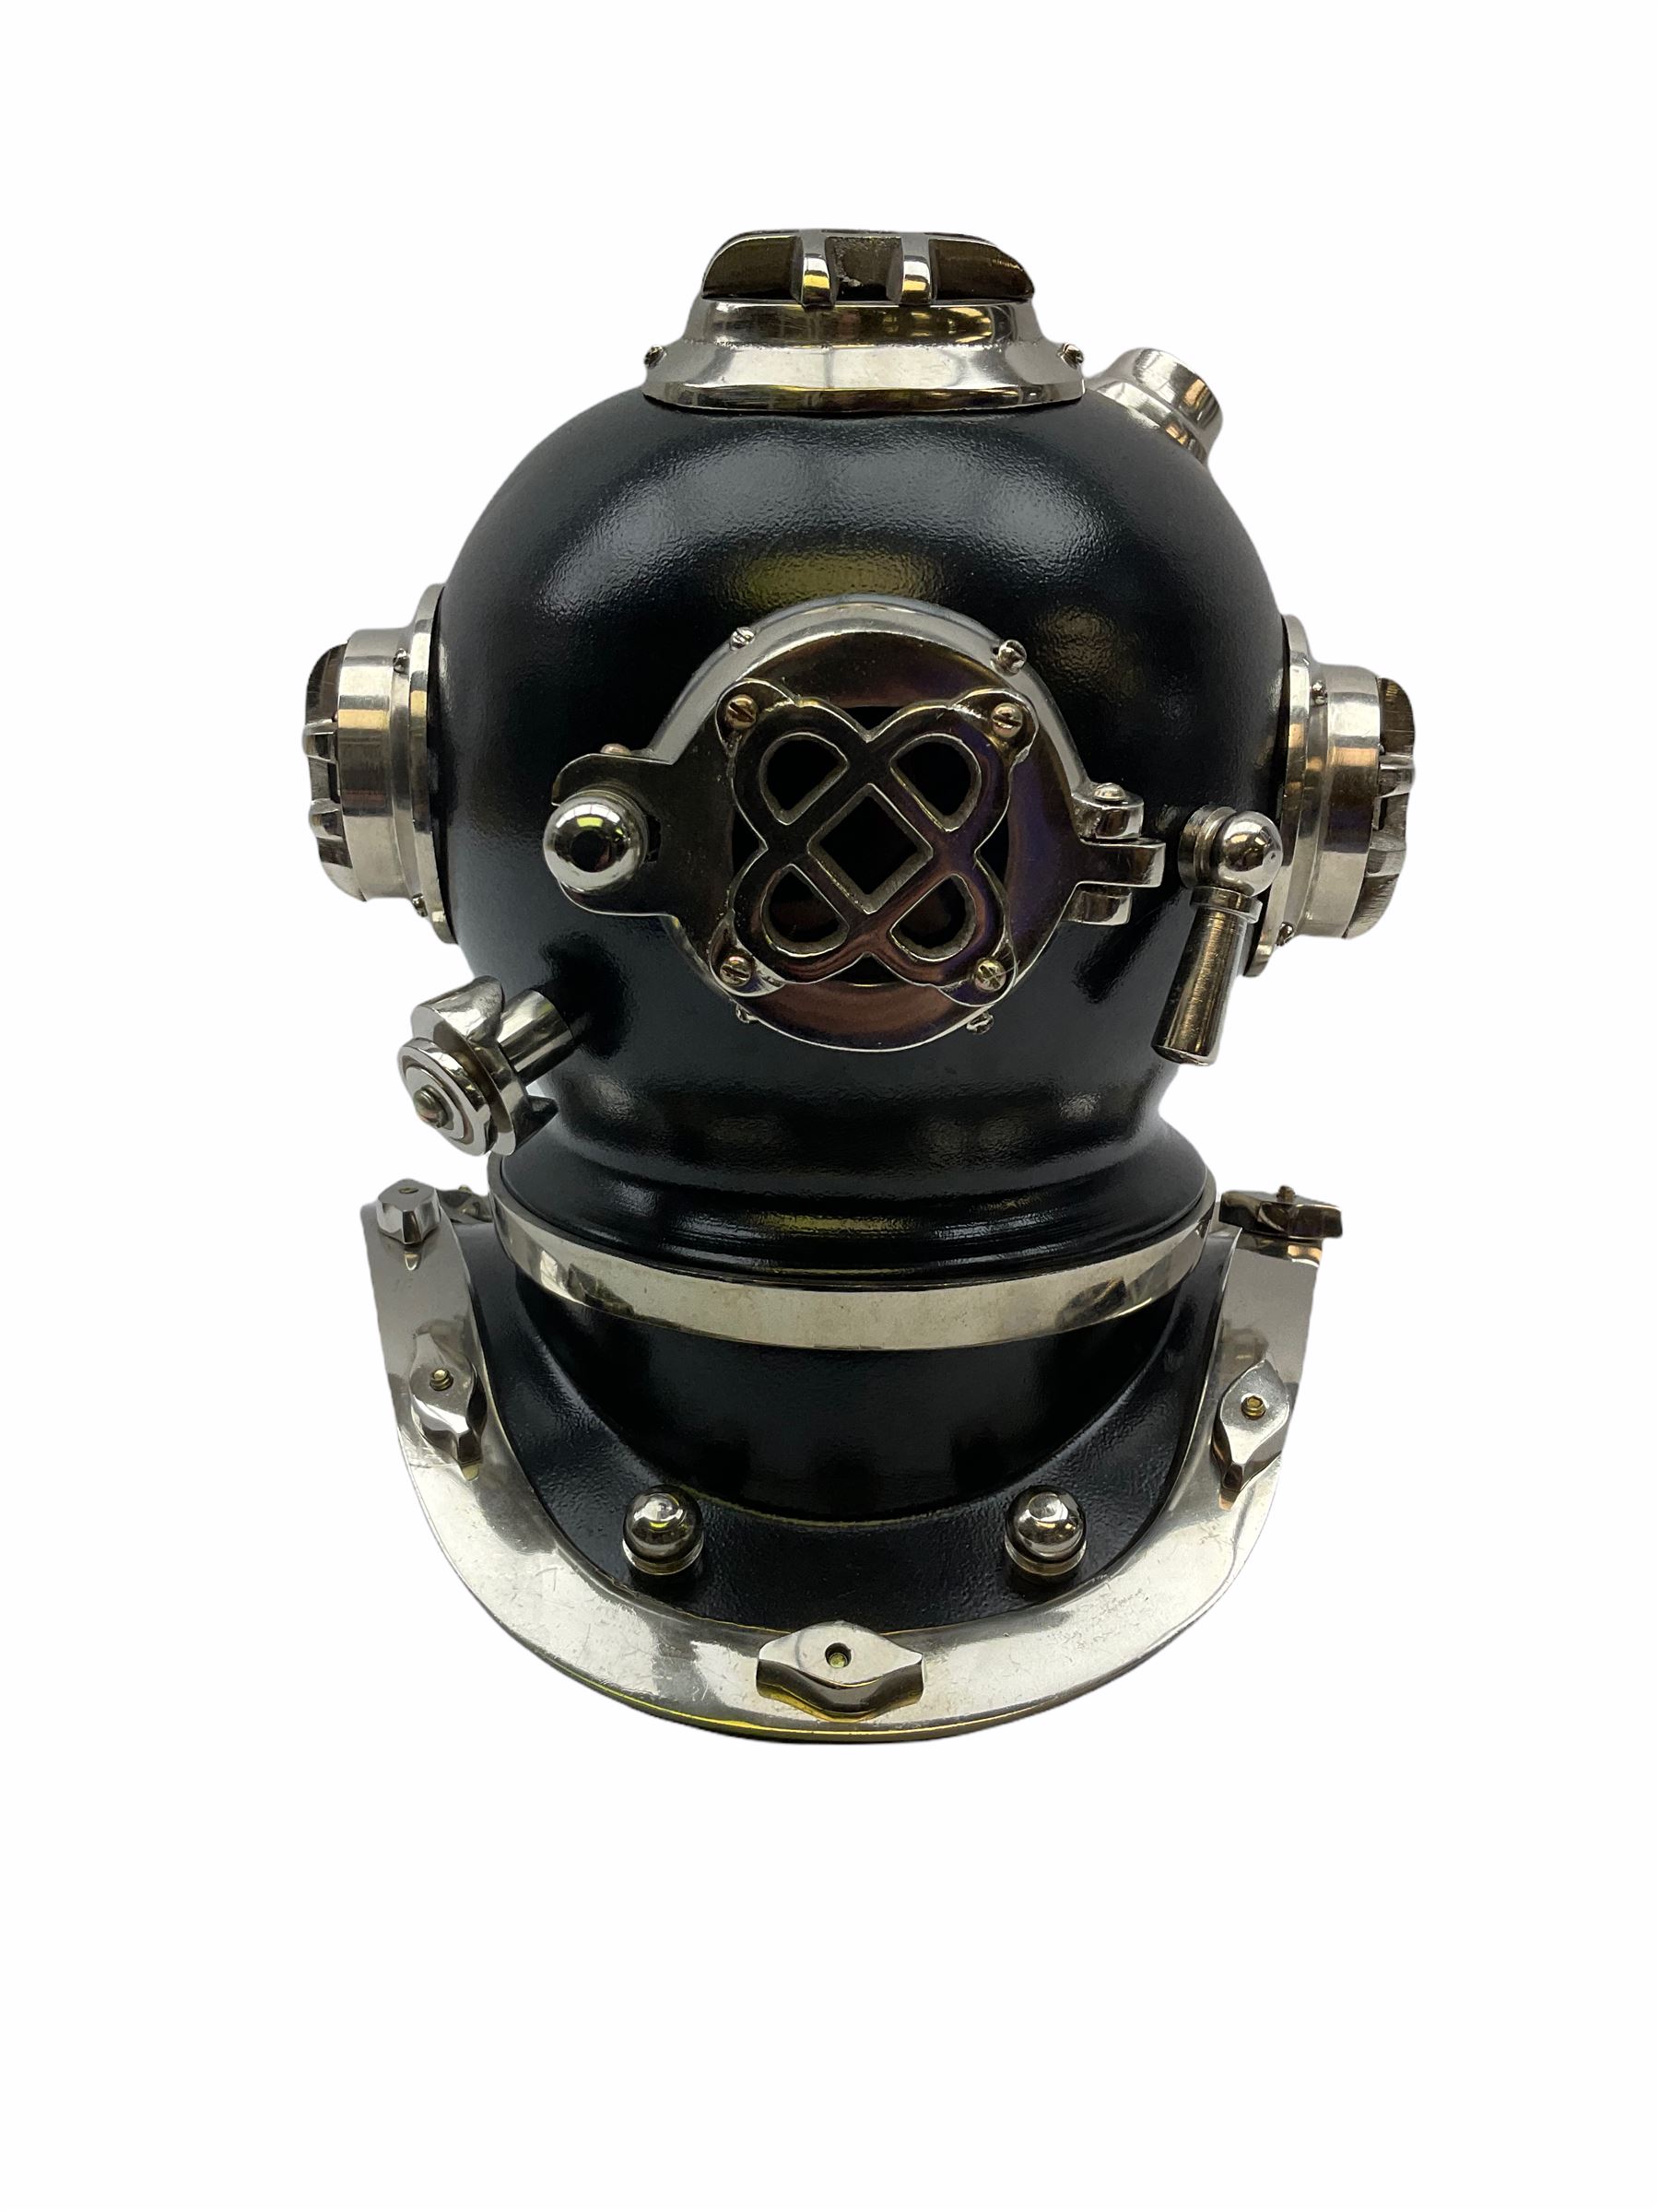 Decorative scuba diving helmet - Image 2 of 5